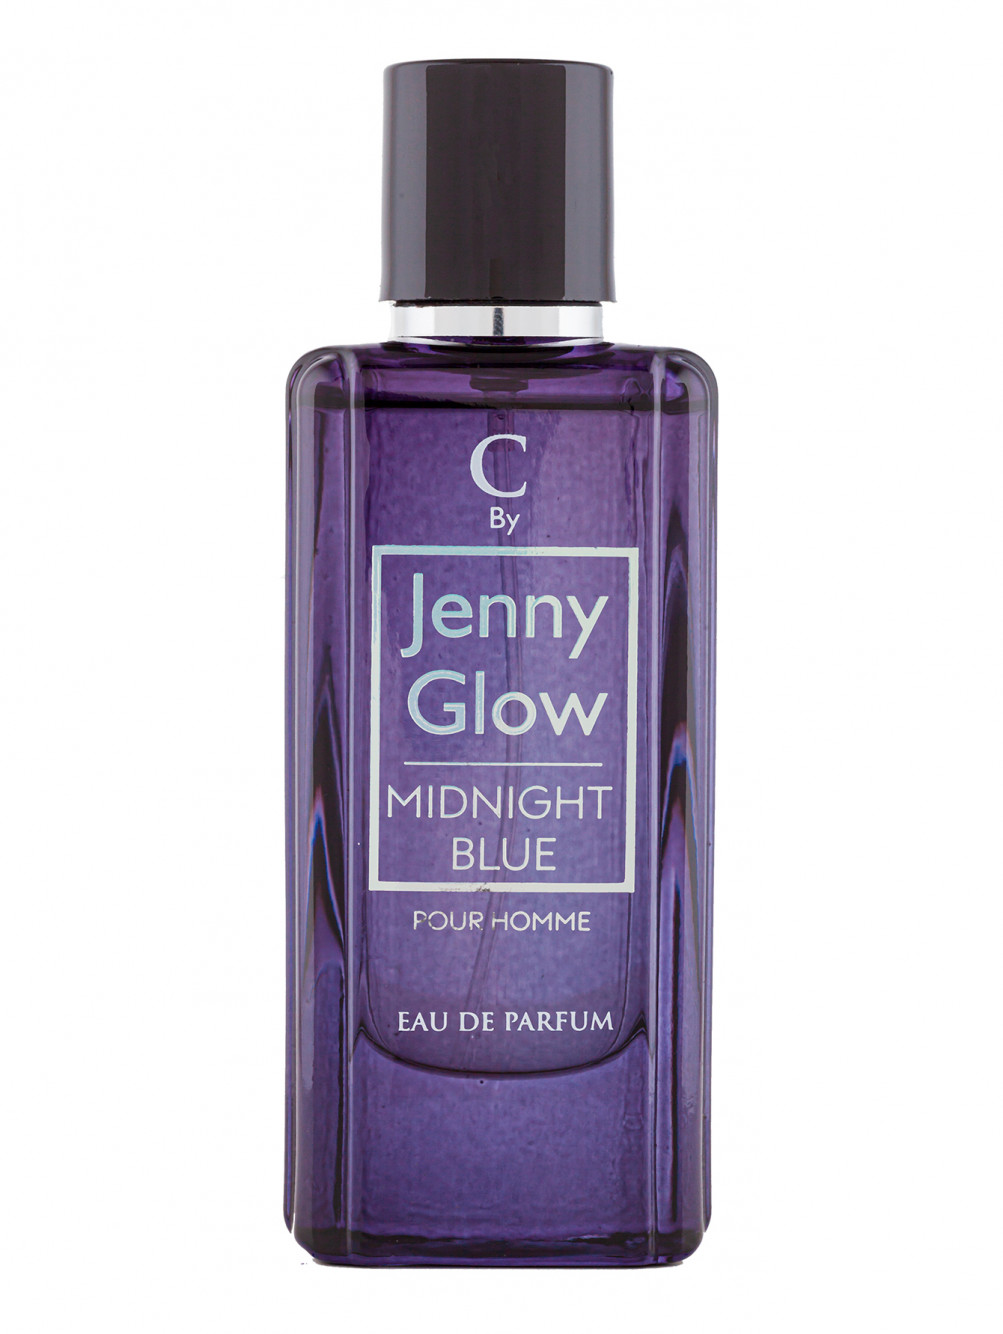 Парфюмерная вода Jenny Glow Midnight Blue Pour Homme, 50 мл - Общий вид